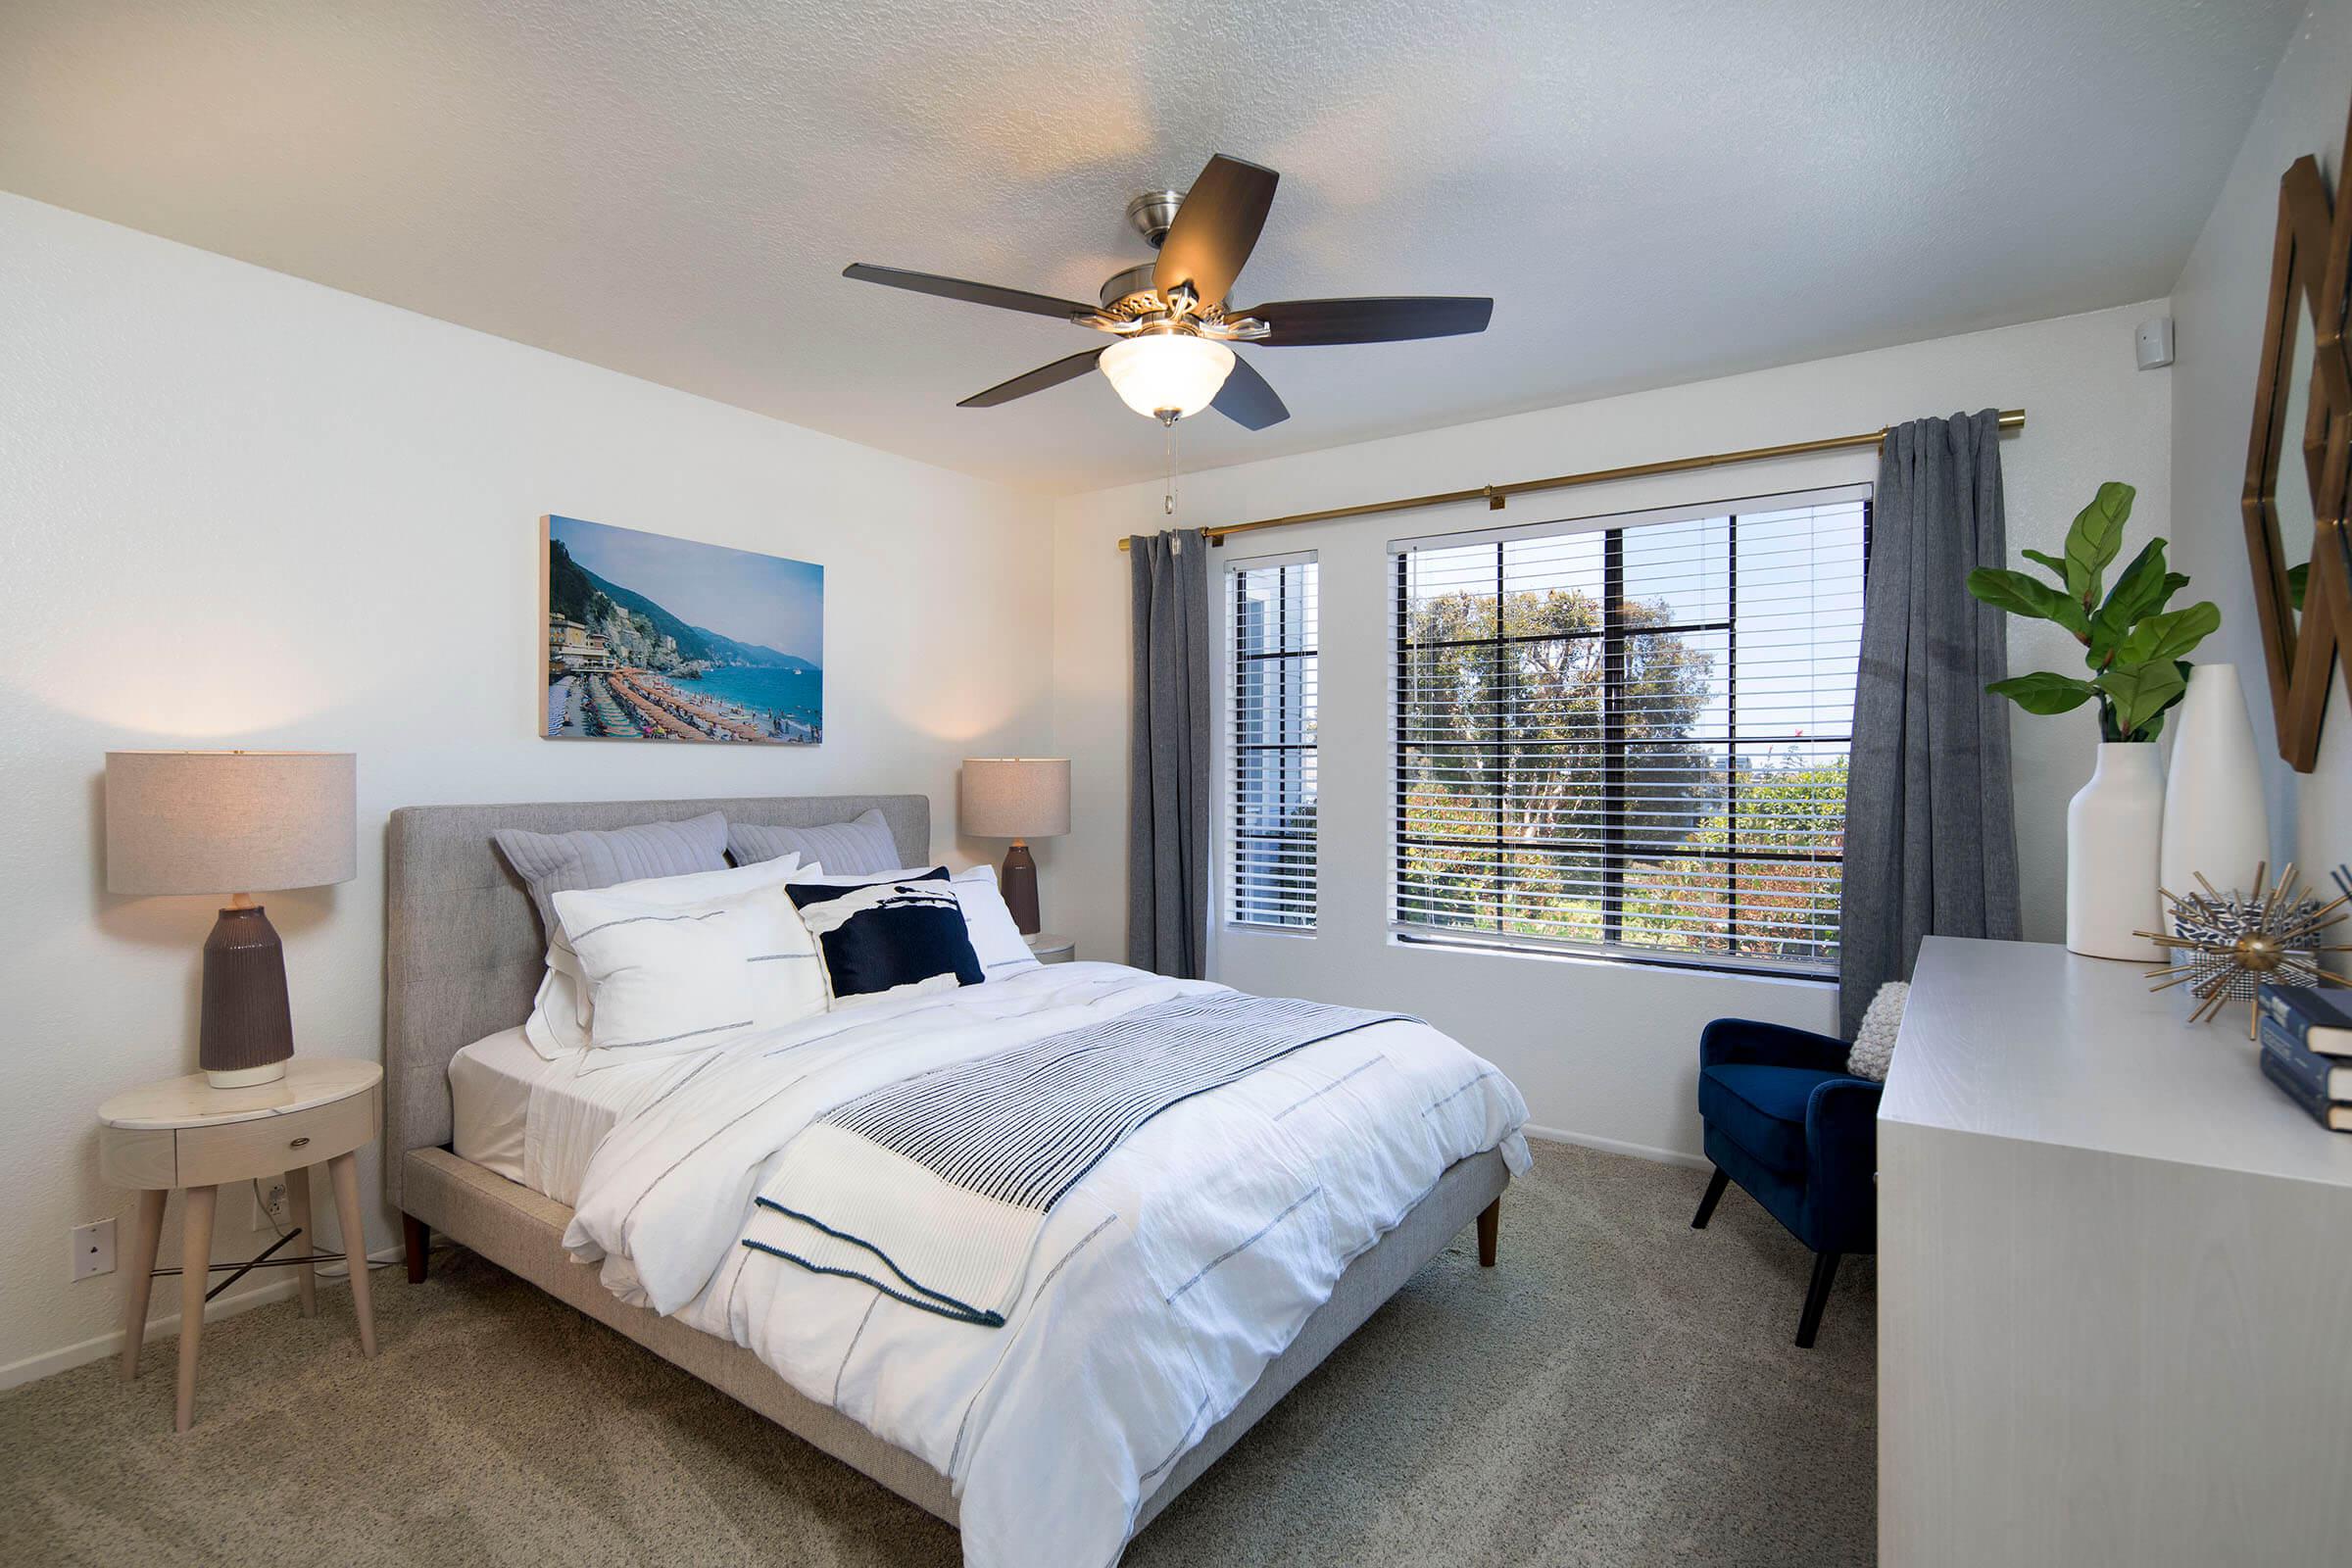 2 BEDROOM CONDOS FOR RENT IN CARLSBAD, CA